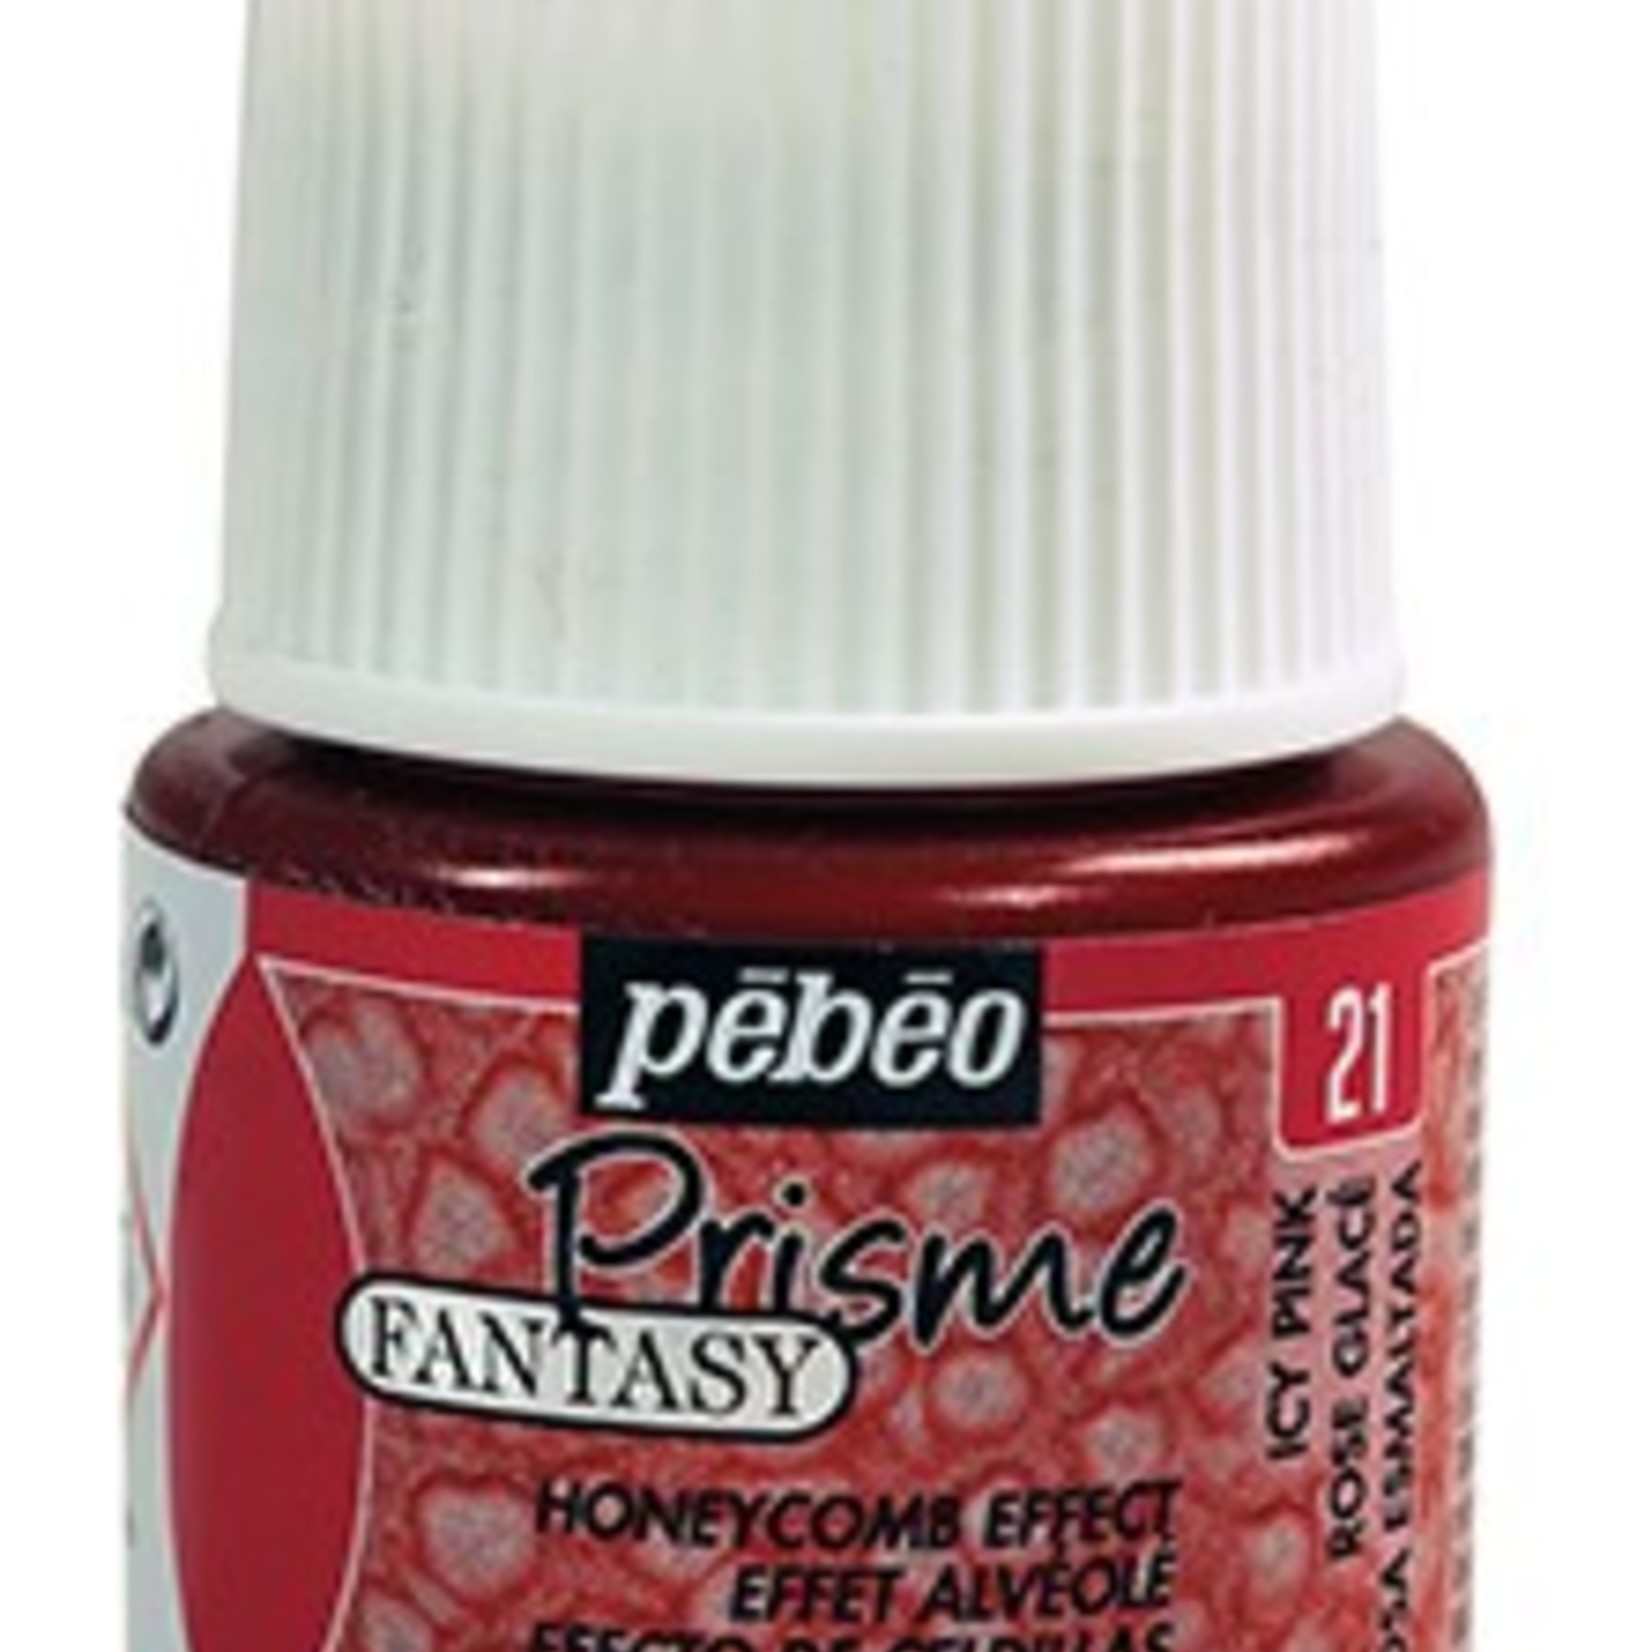 PEBEO PEBEO FANTASY PRISME 21 ICY PINK 45ML